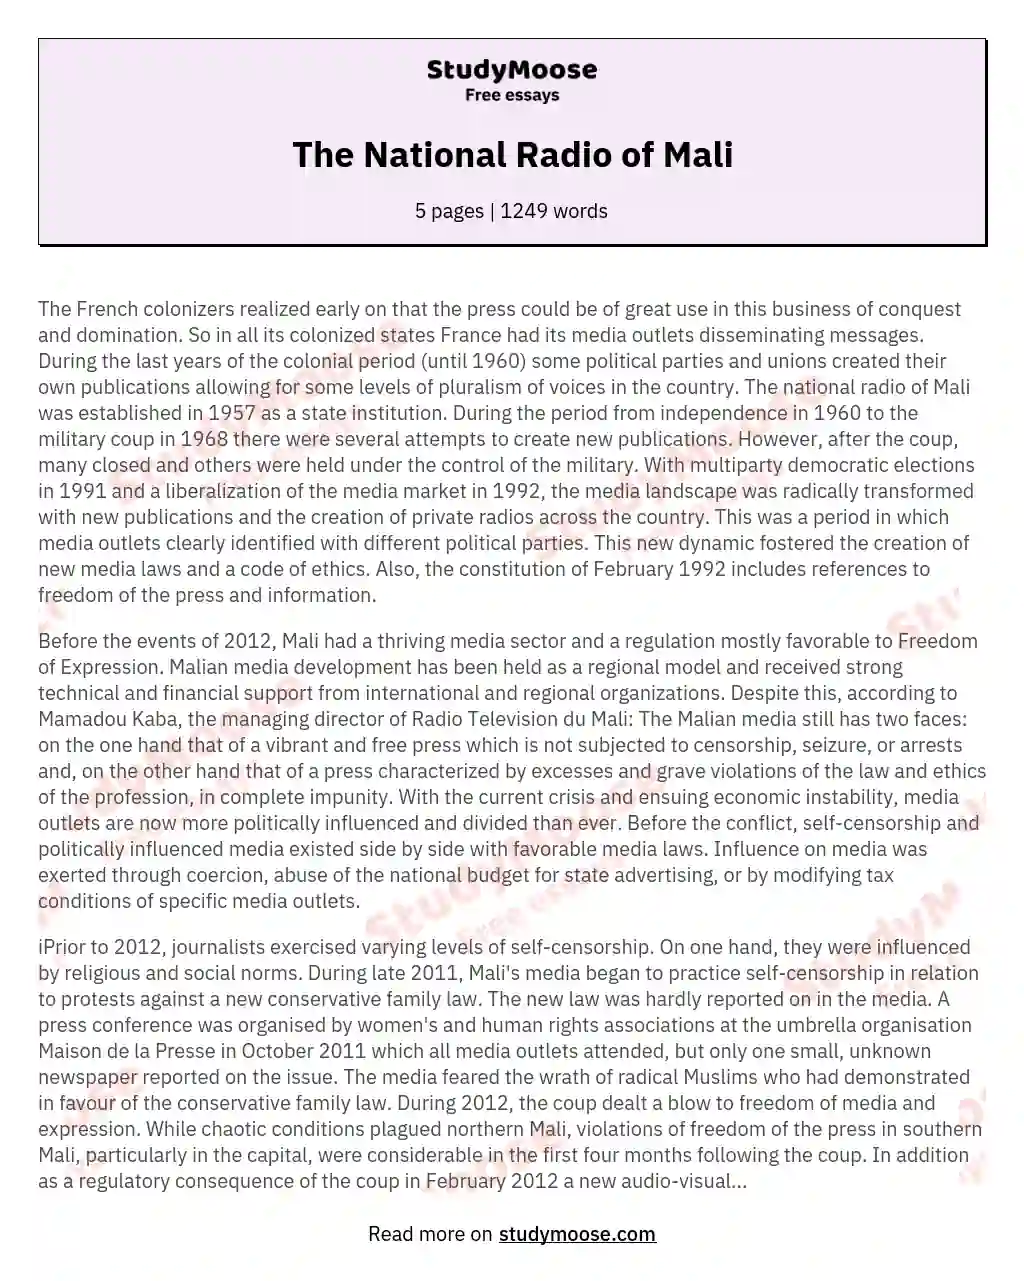 The National Radio of Mali essay